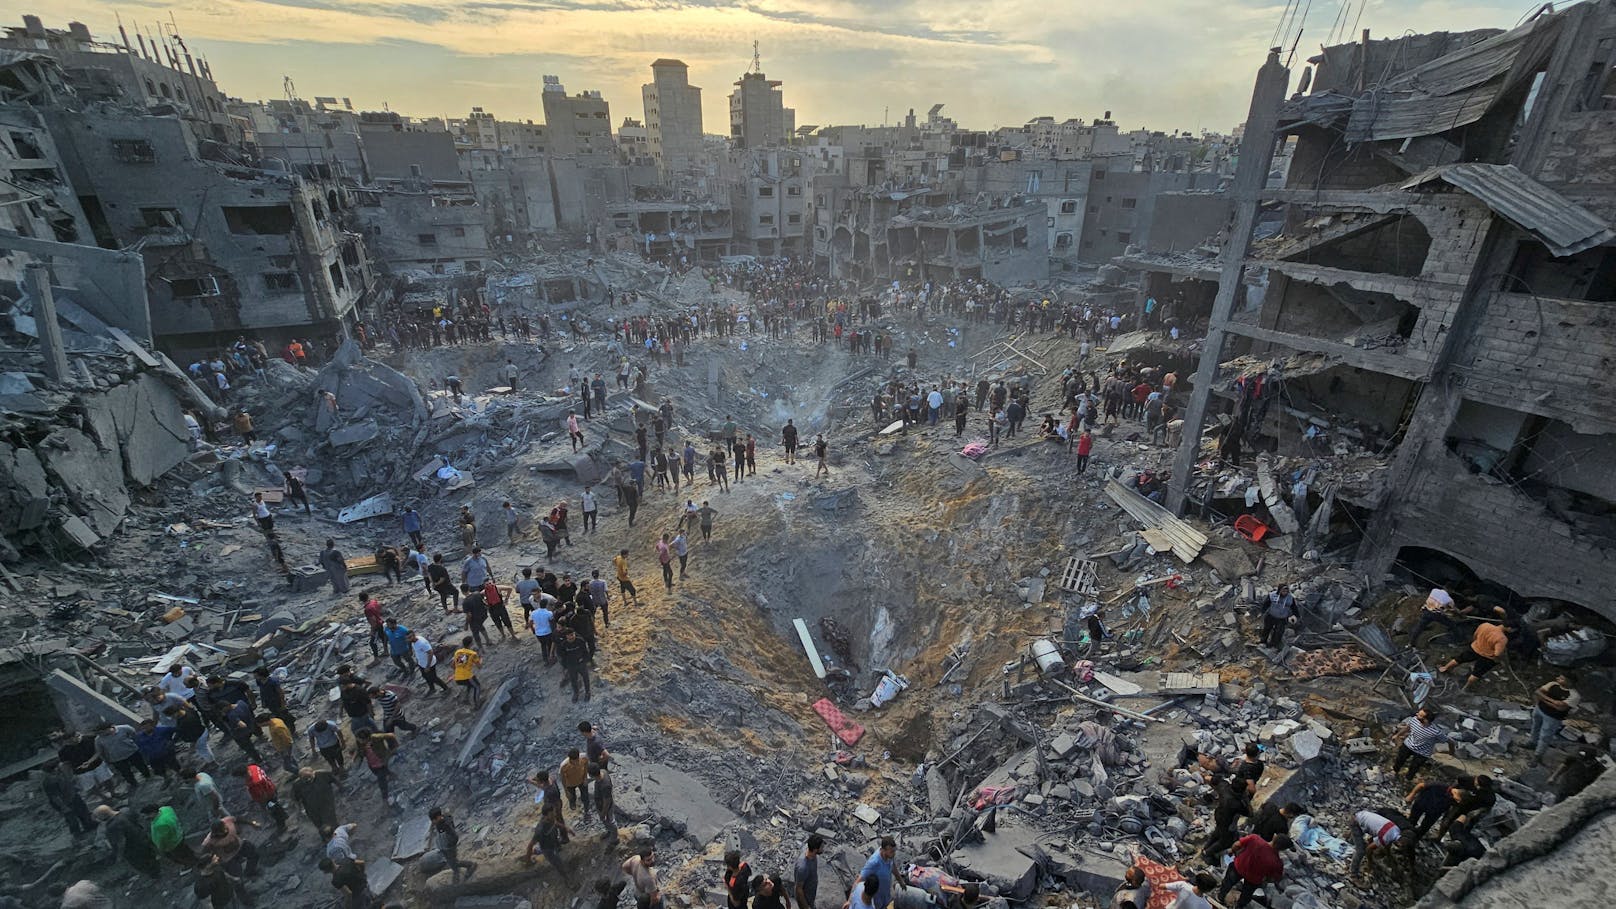 Luftschlag auf Flüchtlingslager in Gaza, unzählige Tote